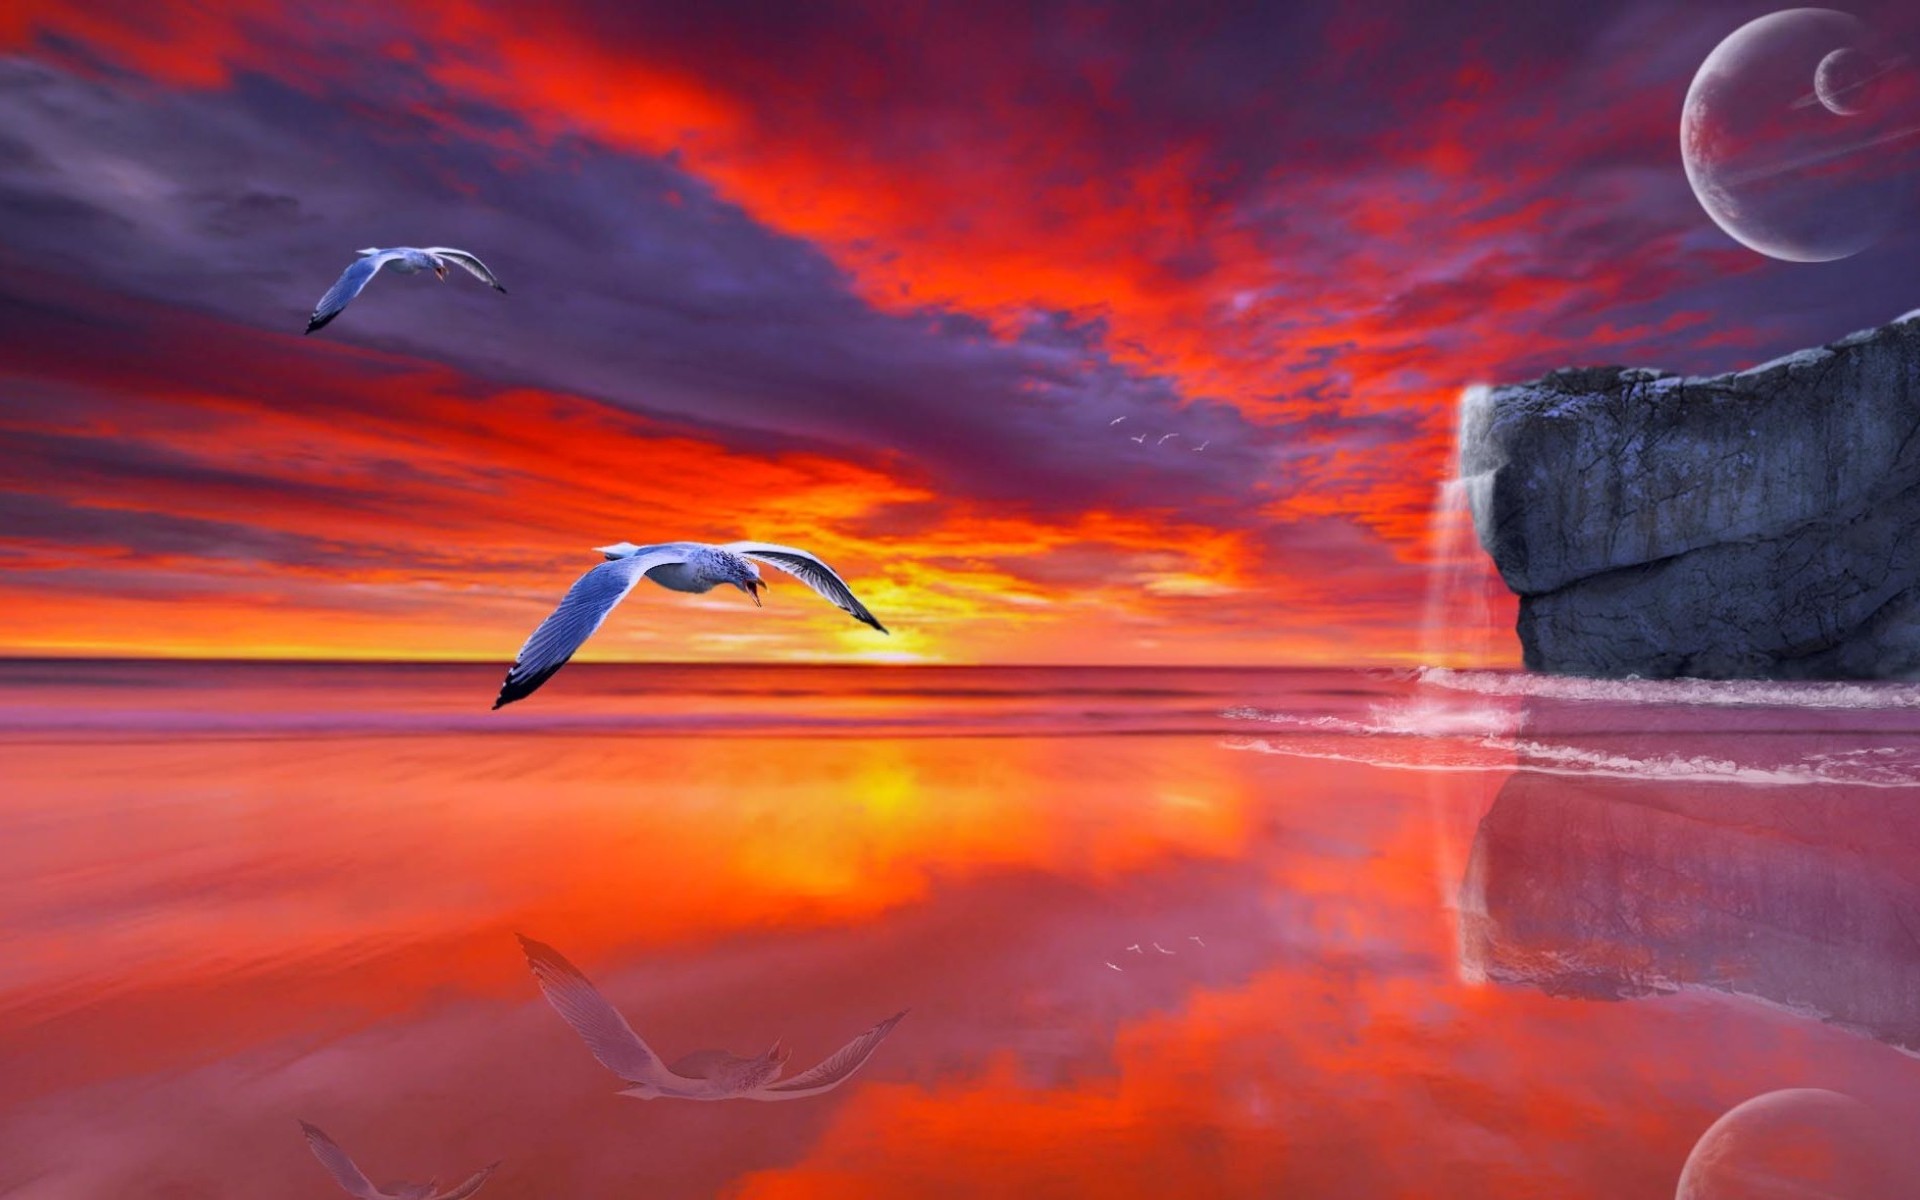 sunset, photography, manipulation, flight, reflection, seagull